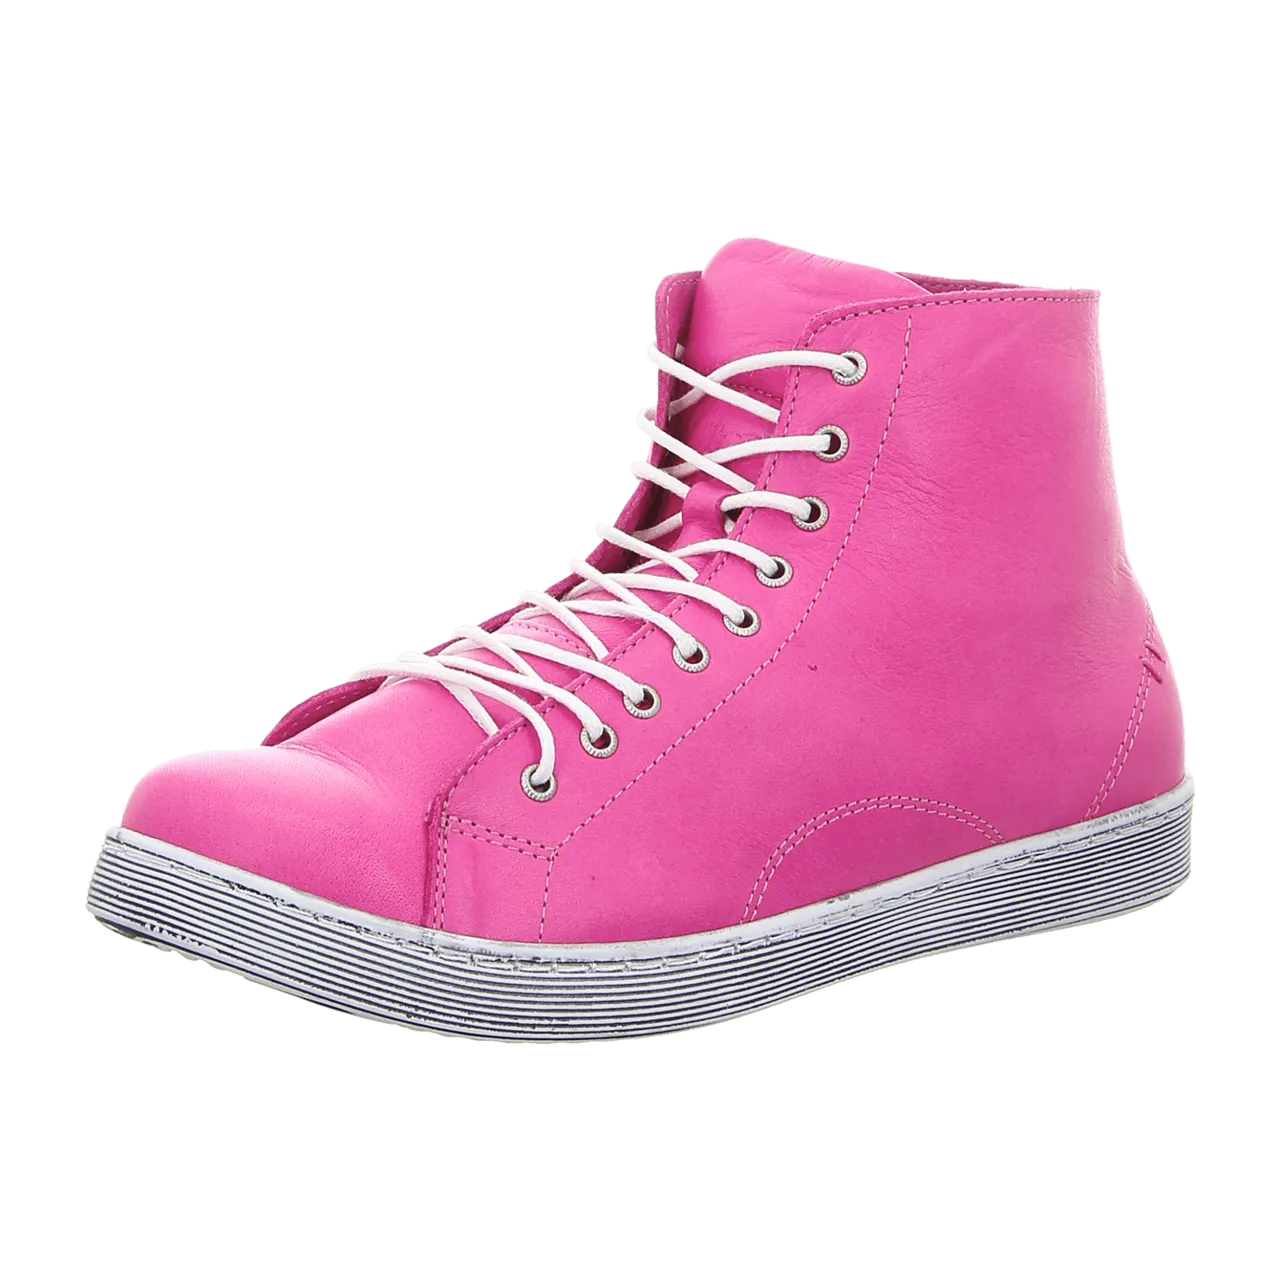 Andrea Conti Sneaker High Top für Damen, pink